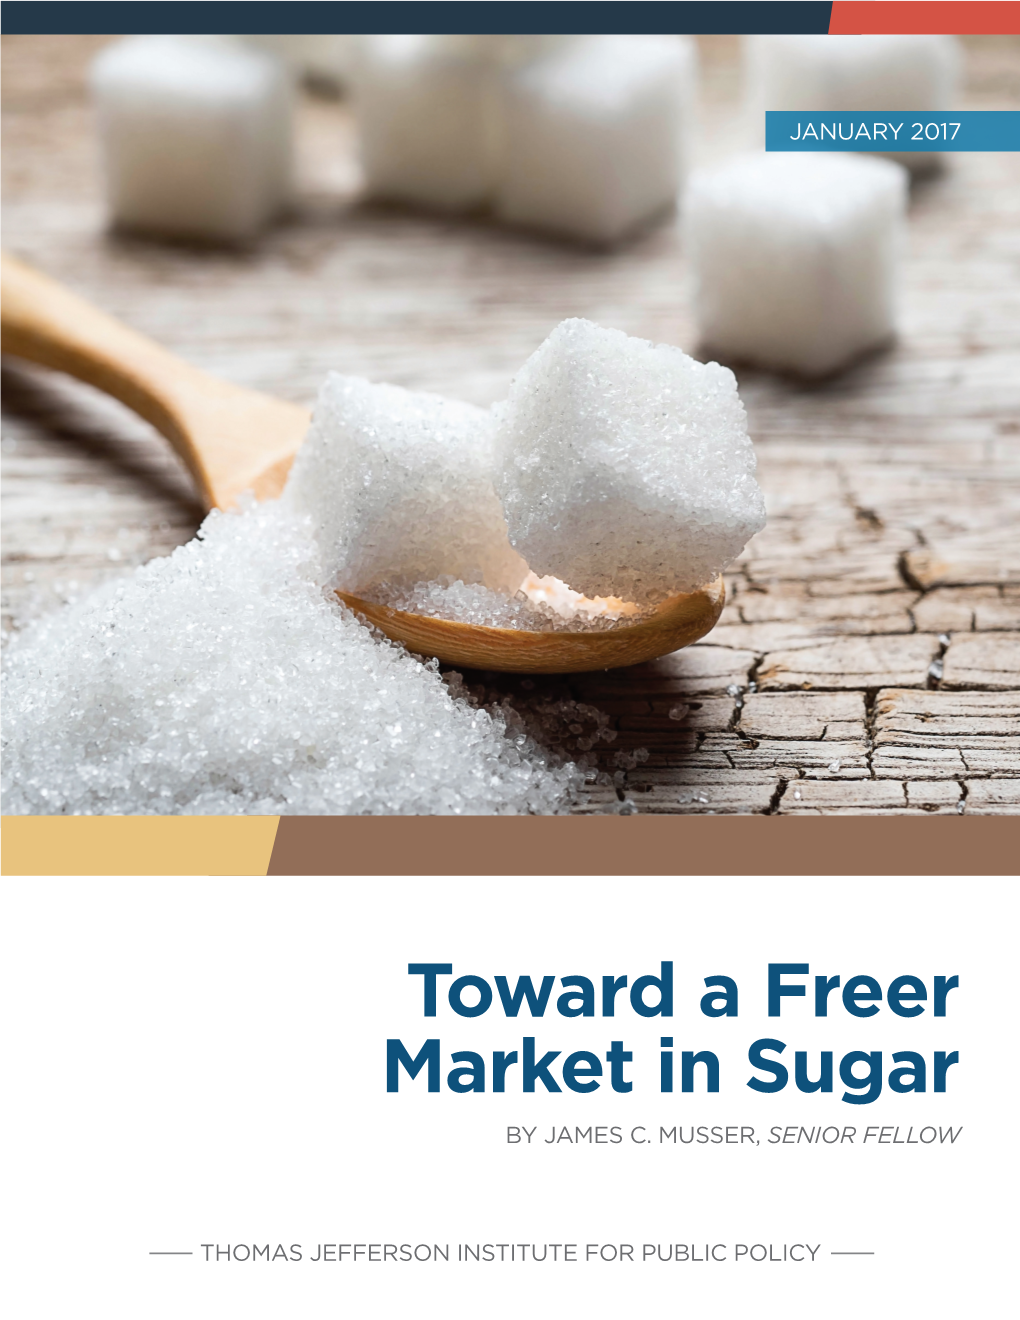 Toward a Freer Market in Sugar by JAMES C